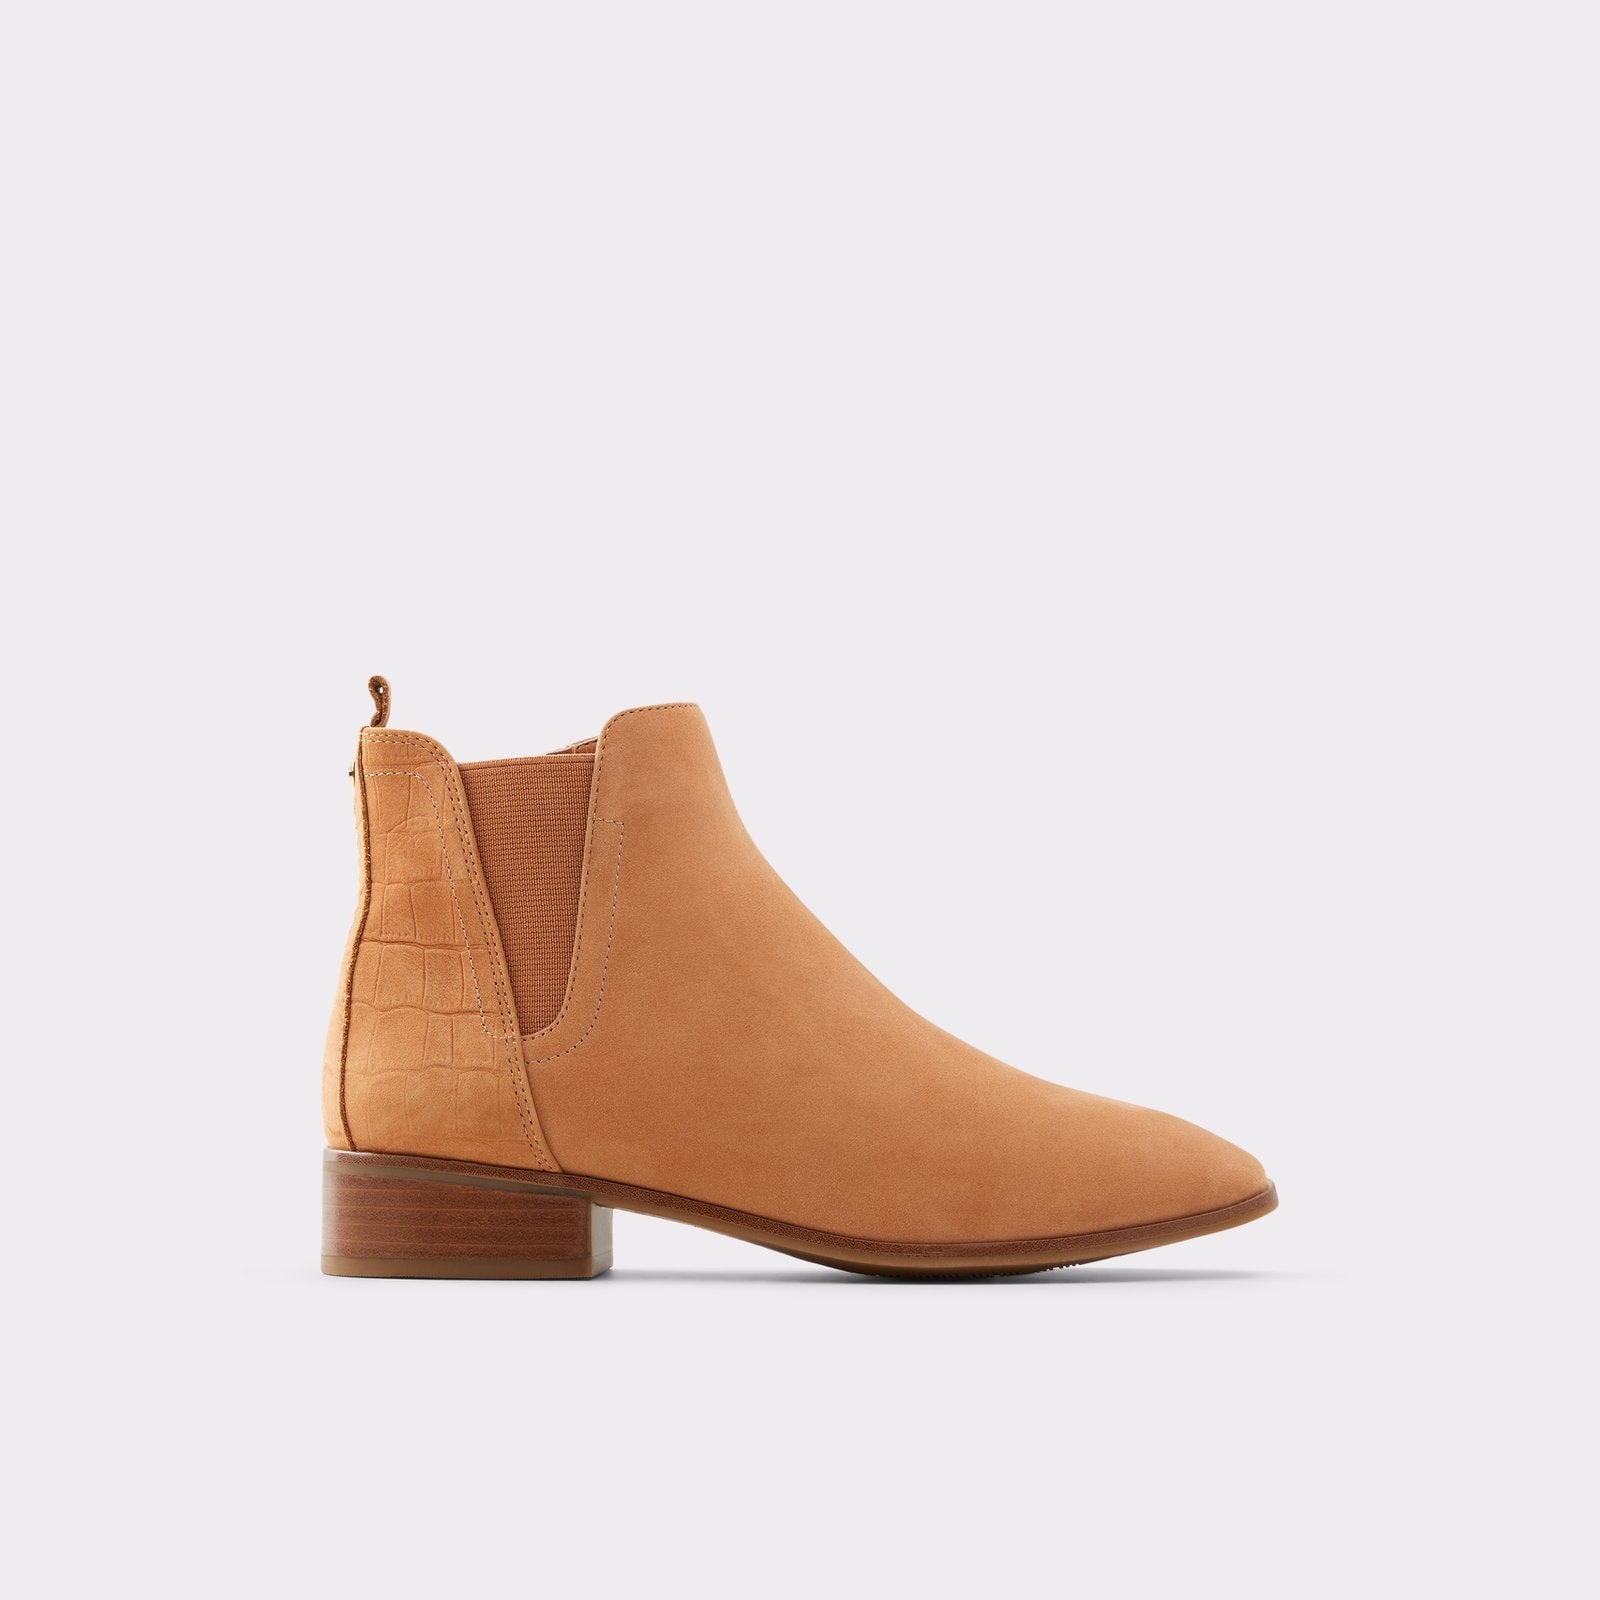 Aldo Women’s Chelsea Boots Torwenflex (Medium Brown)